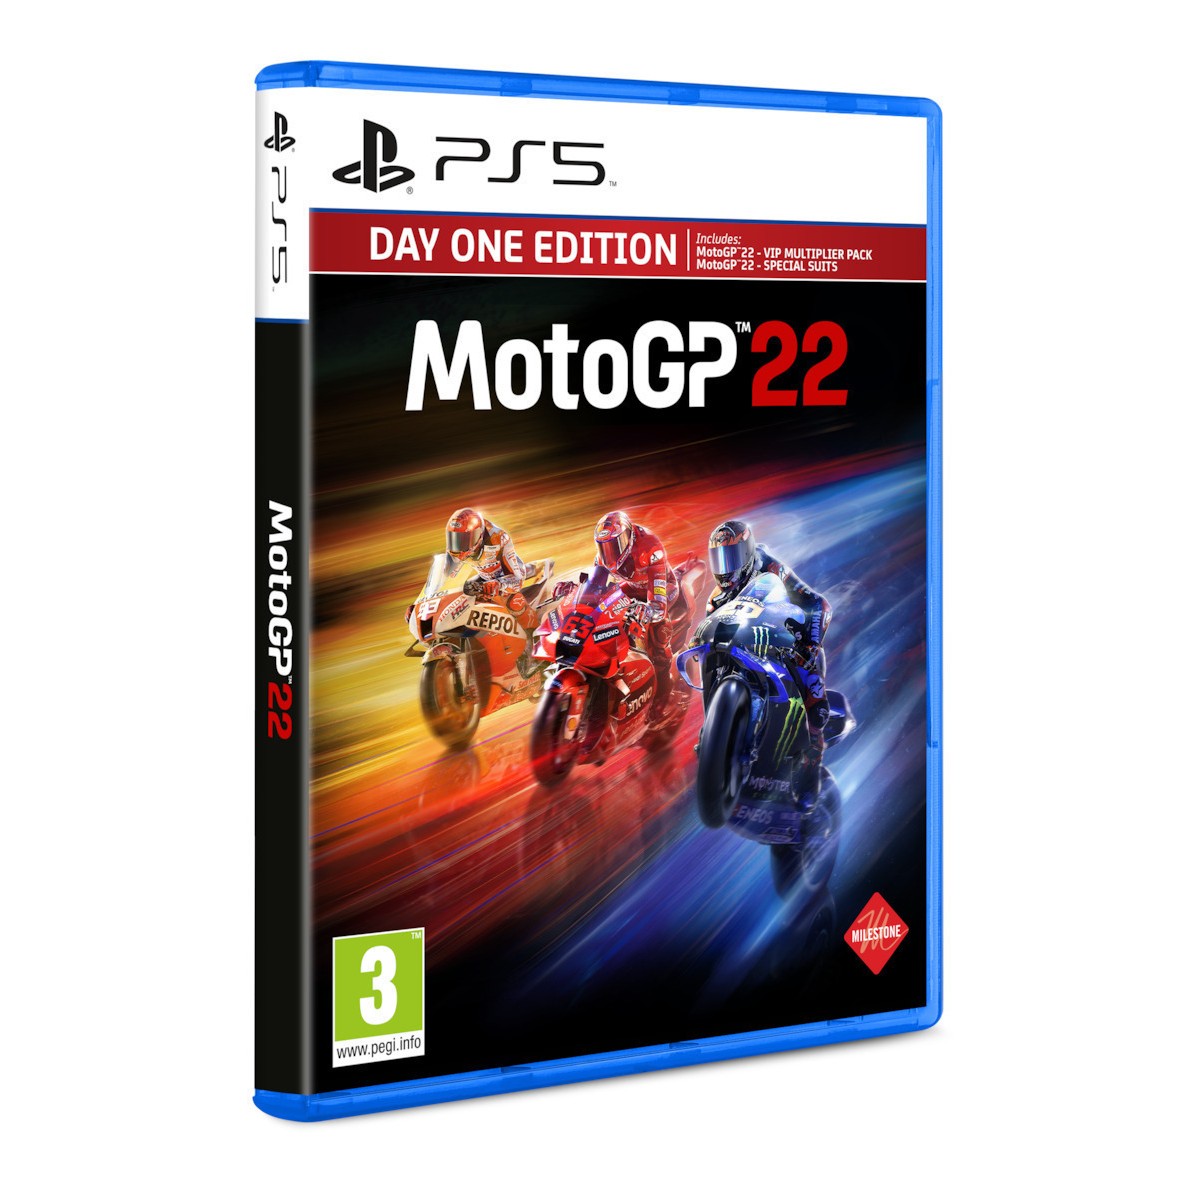 PS5 MOTO GP 22 DAYONE EDITION GAME